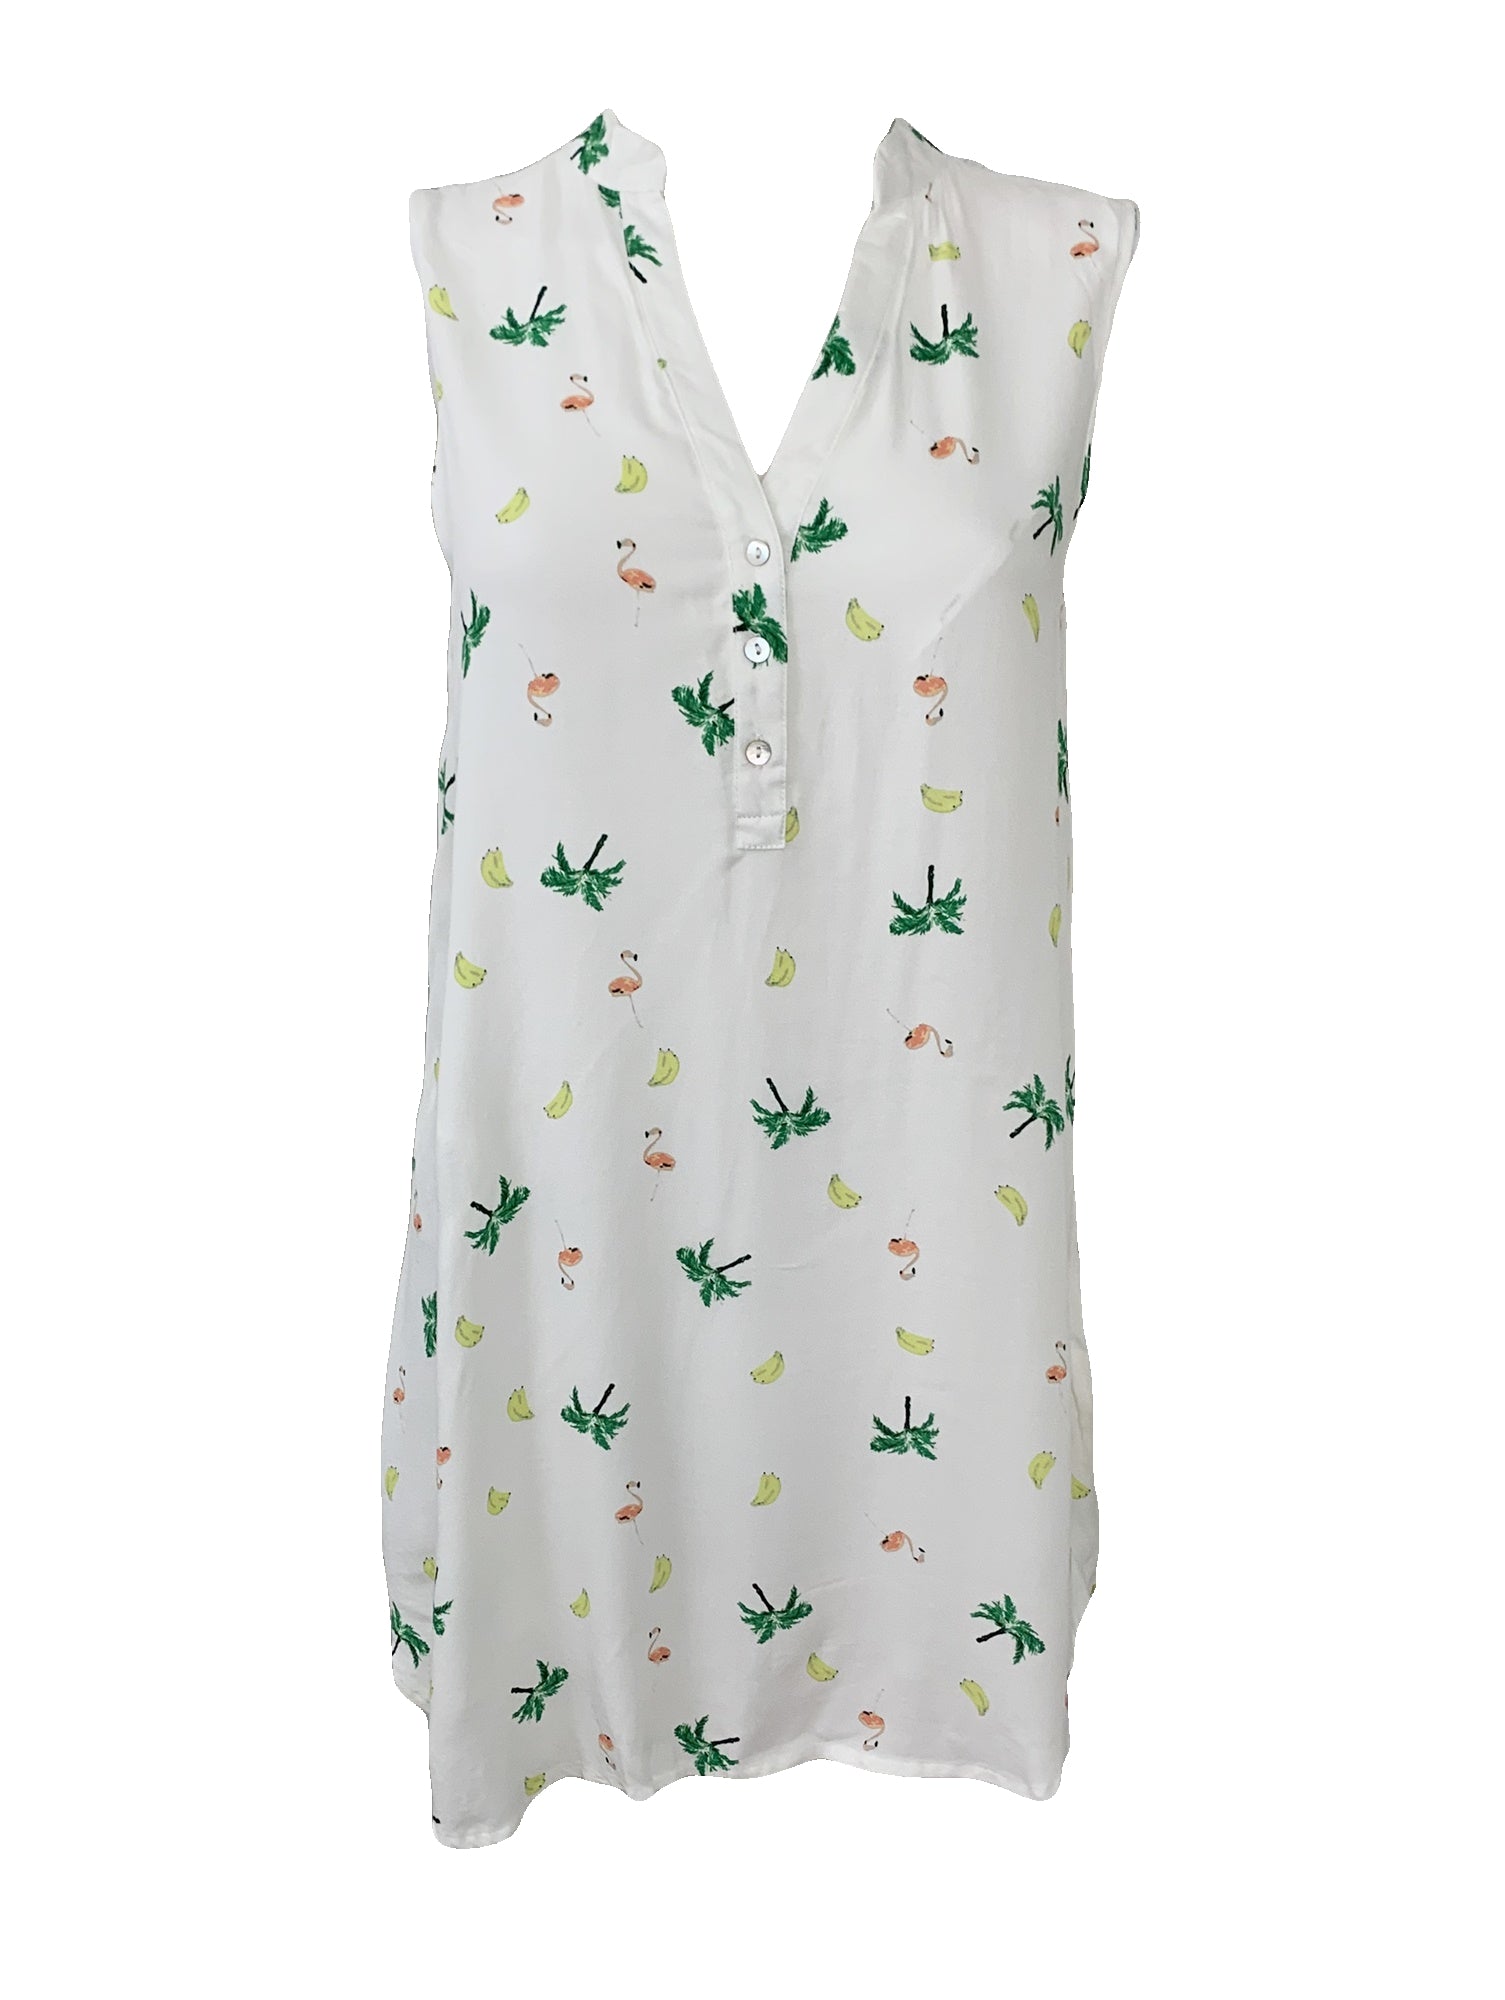 Flamingo Fruit Salad Shirt Dress Size XS NWT